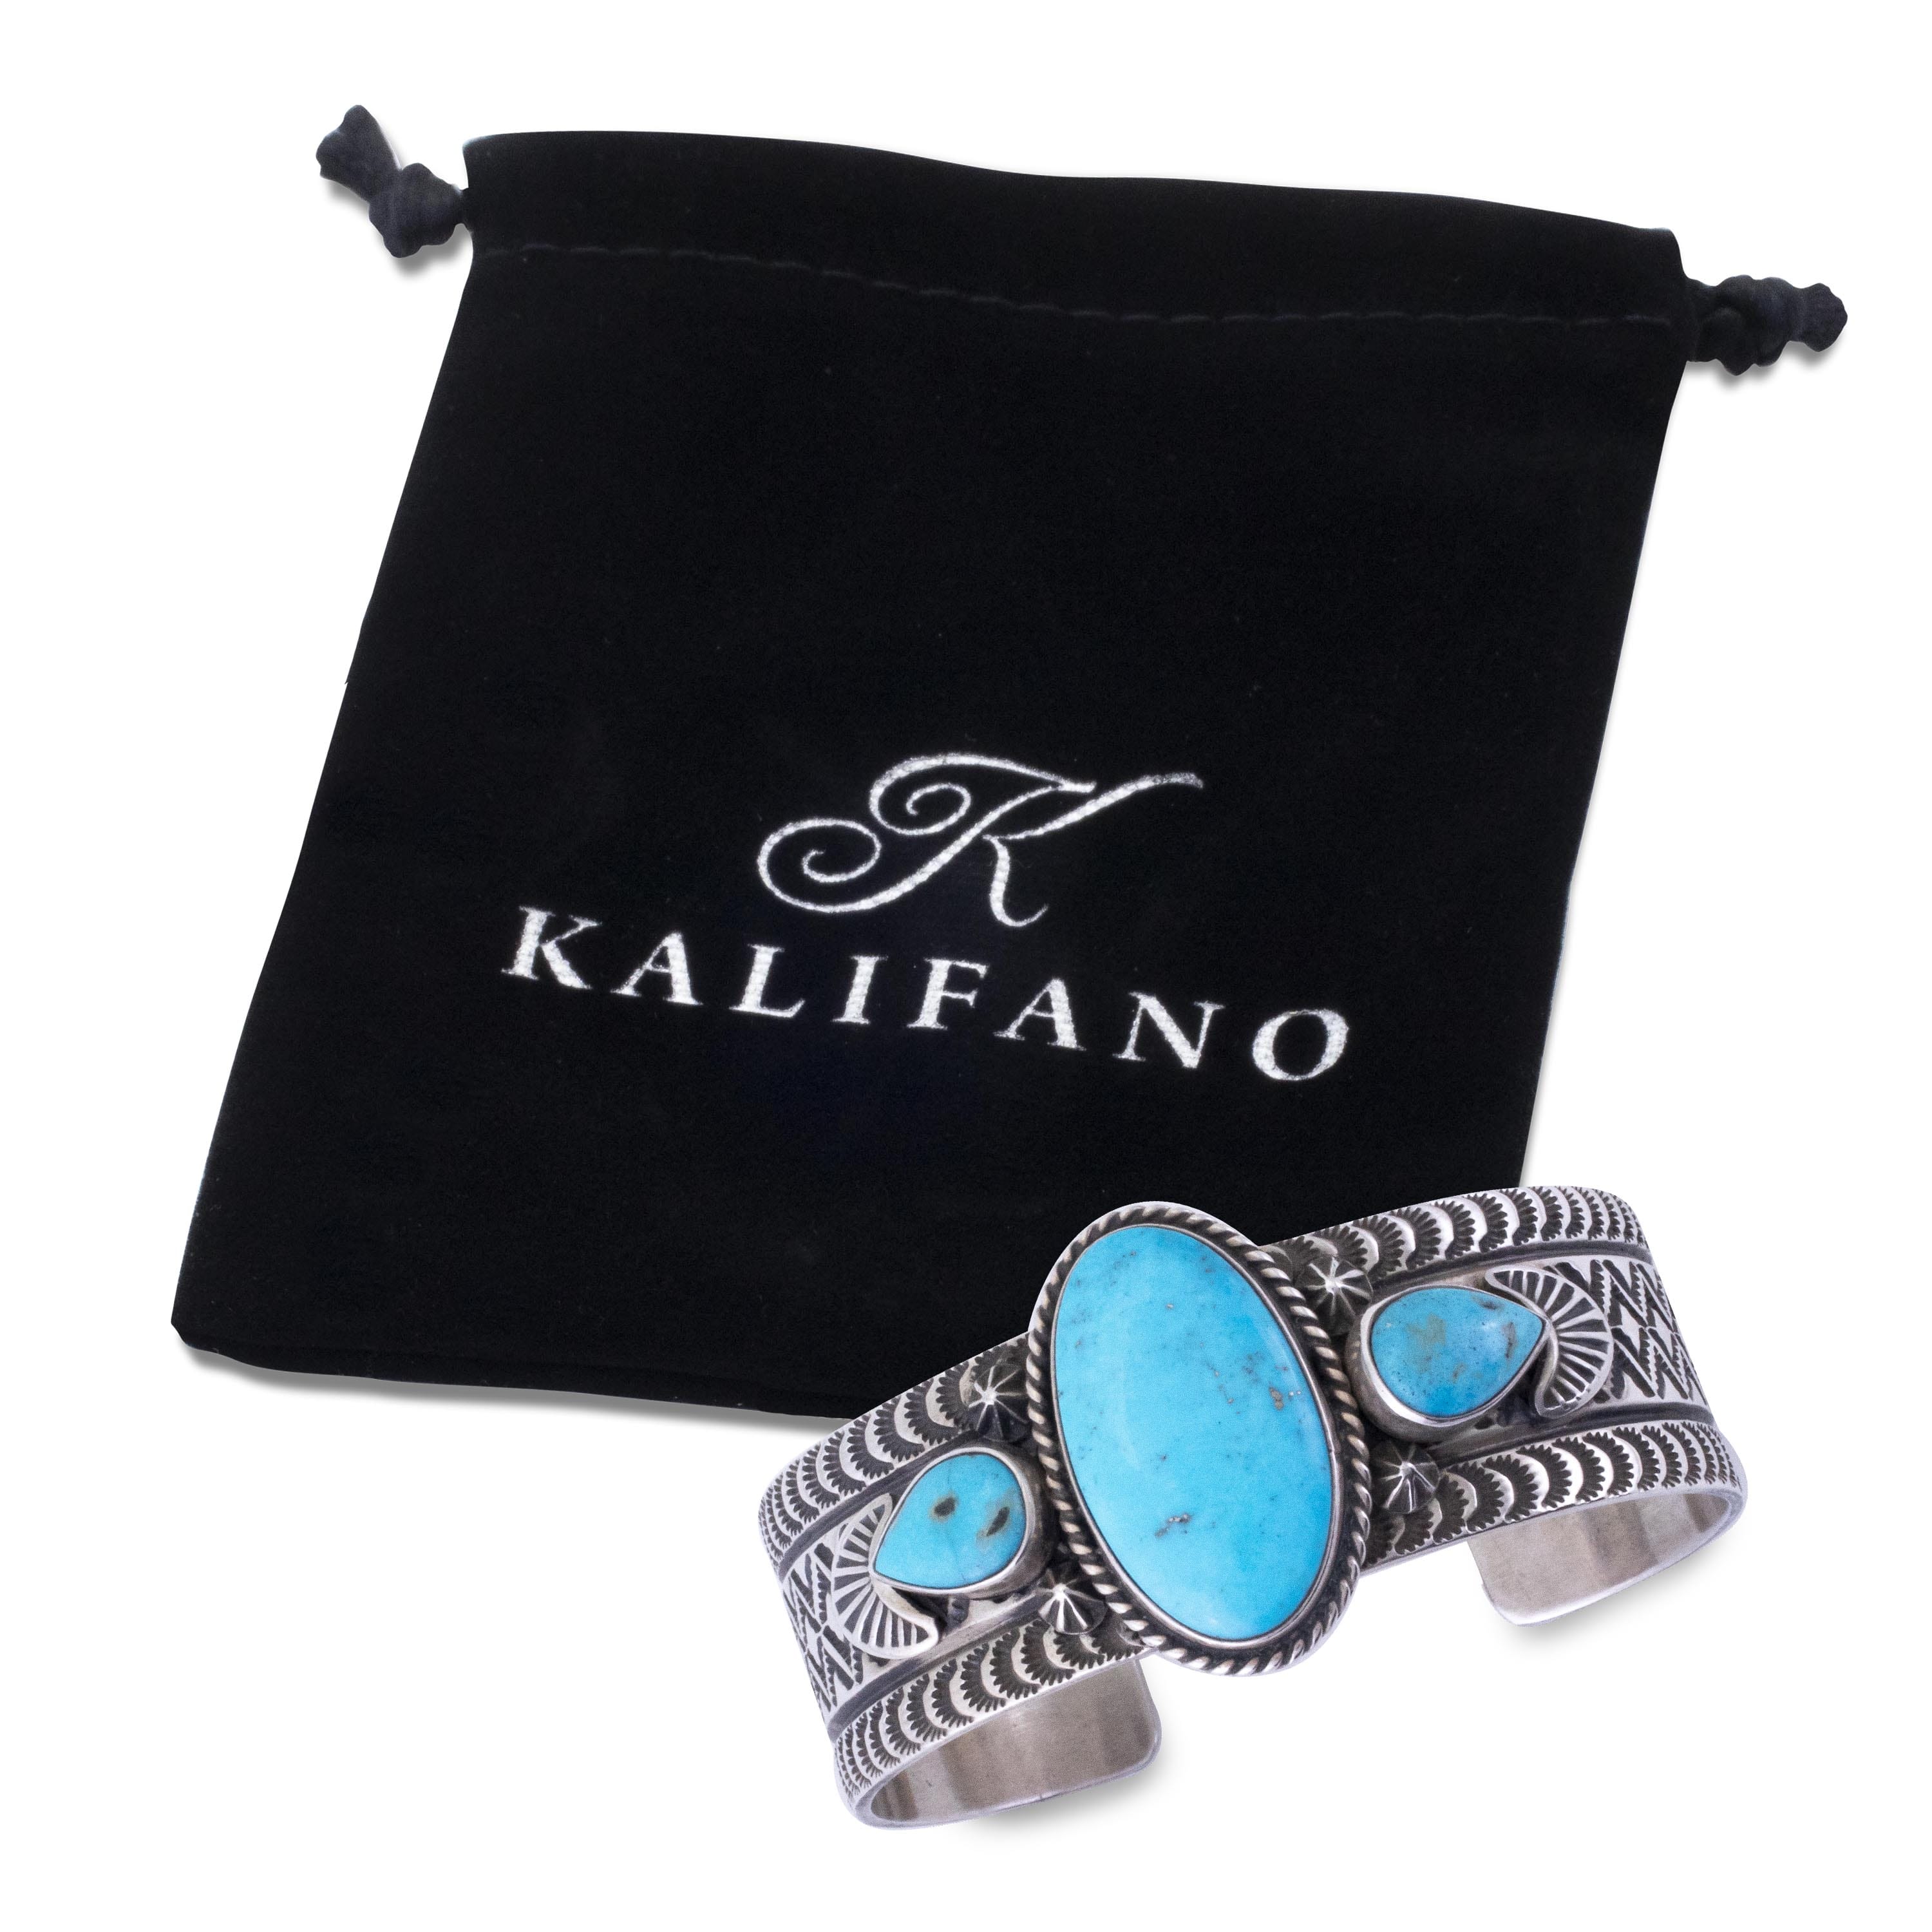 Kalifano Native American Jewelry Donovan Cadman Navajo Kingman Turquoise USA Native American Made 925 Sterling Silver Cuff NAB2700.013